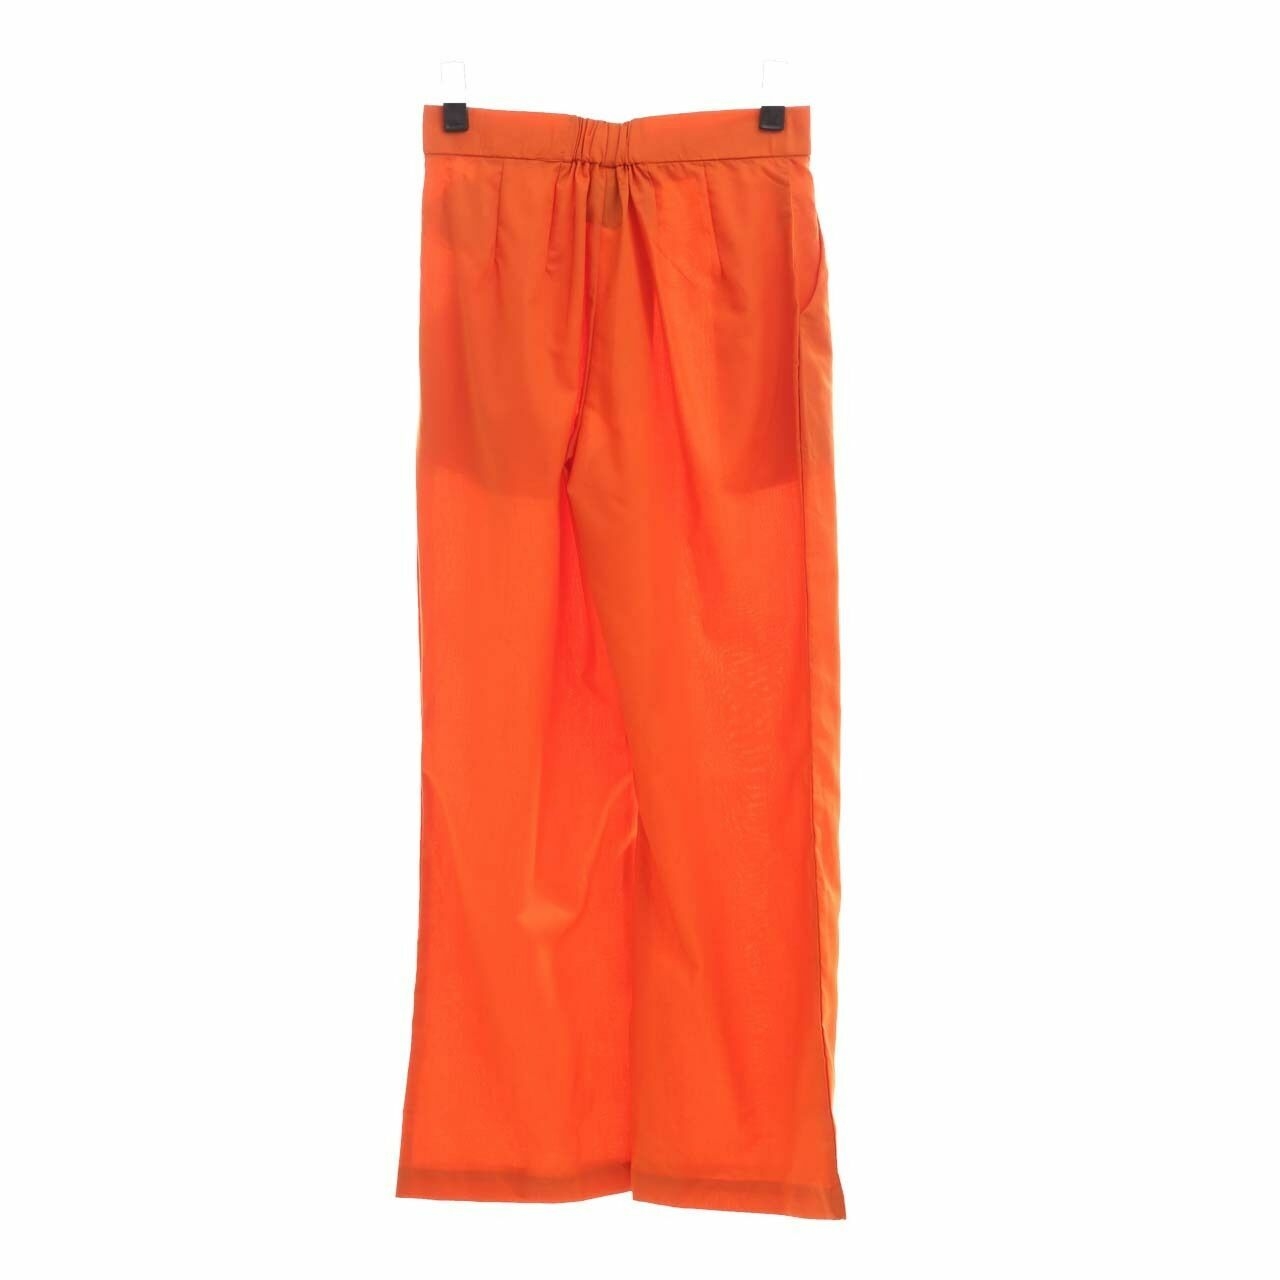 ATS The Label Orange Long Pants 